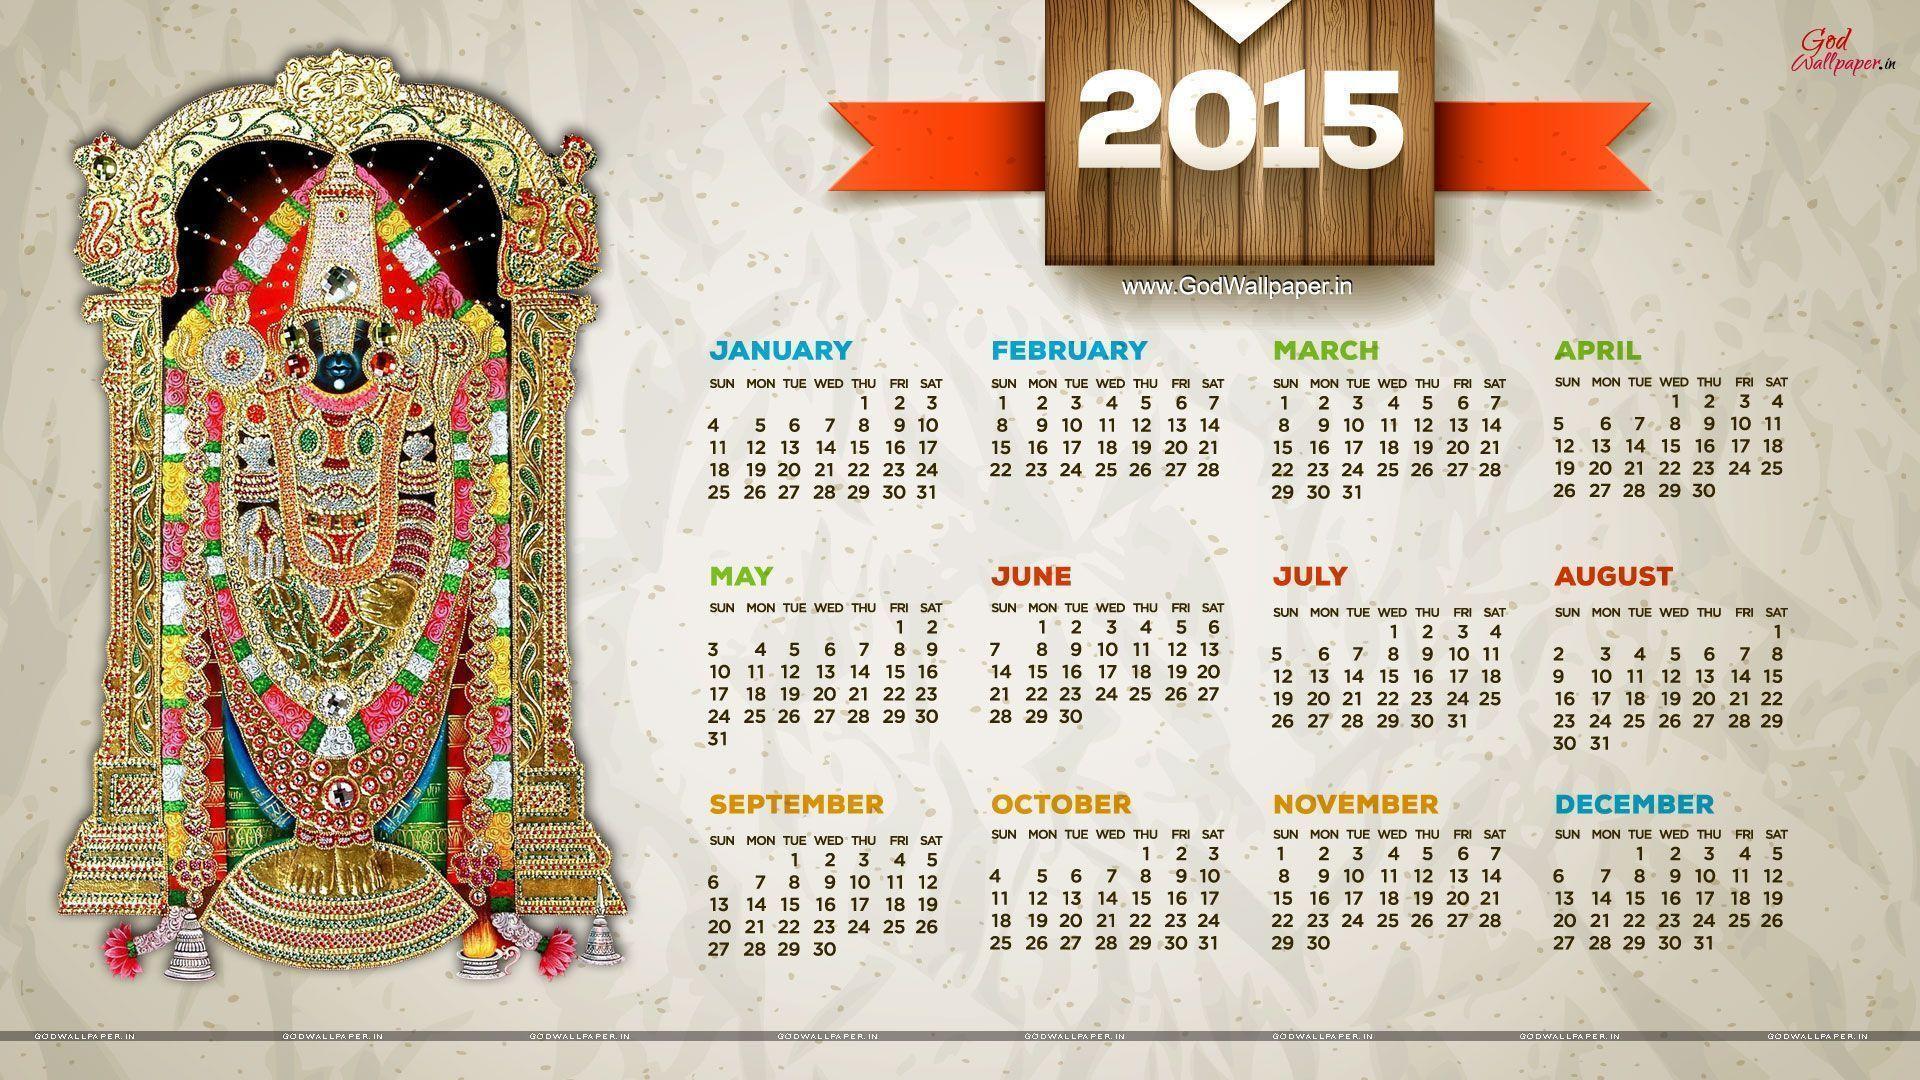 Current affairs, Desktop Wallpaper Calendar 2015 Free Download